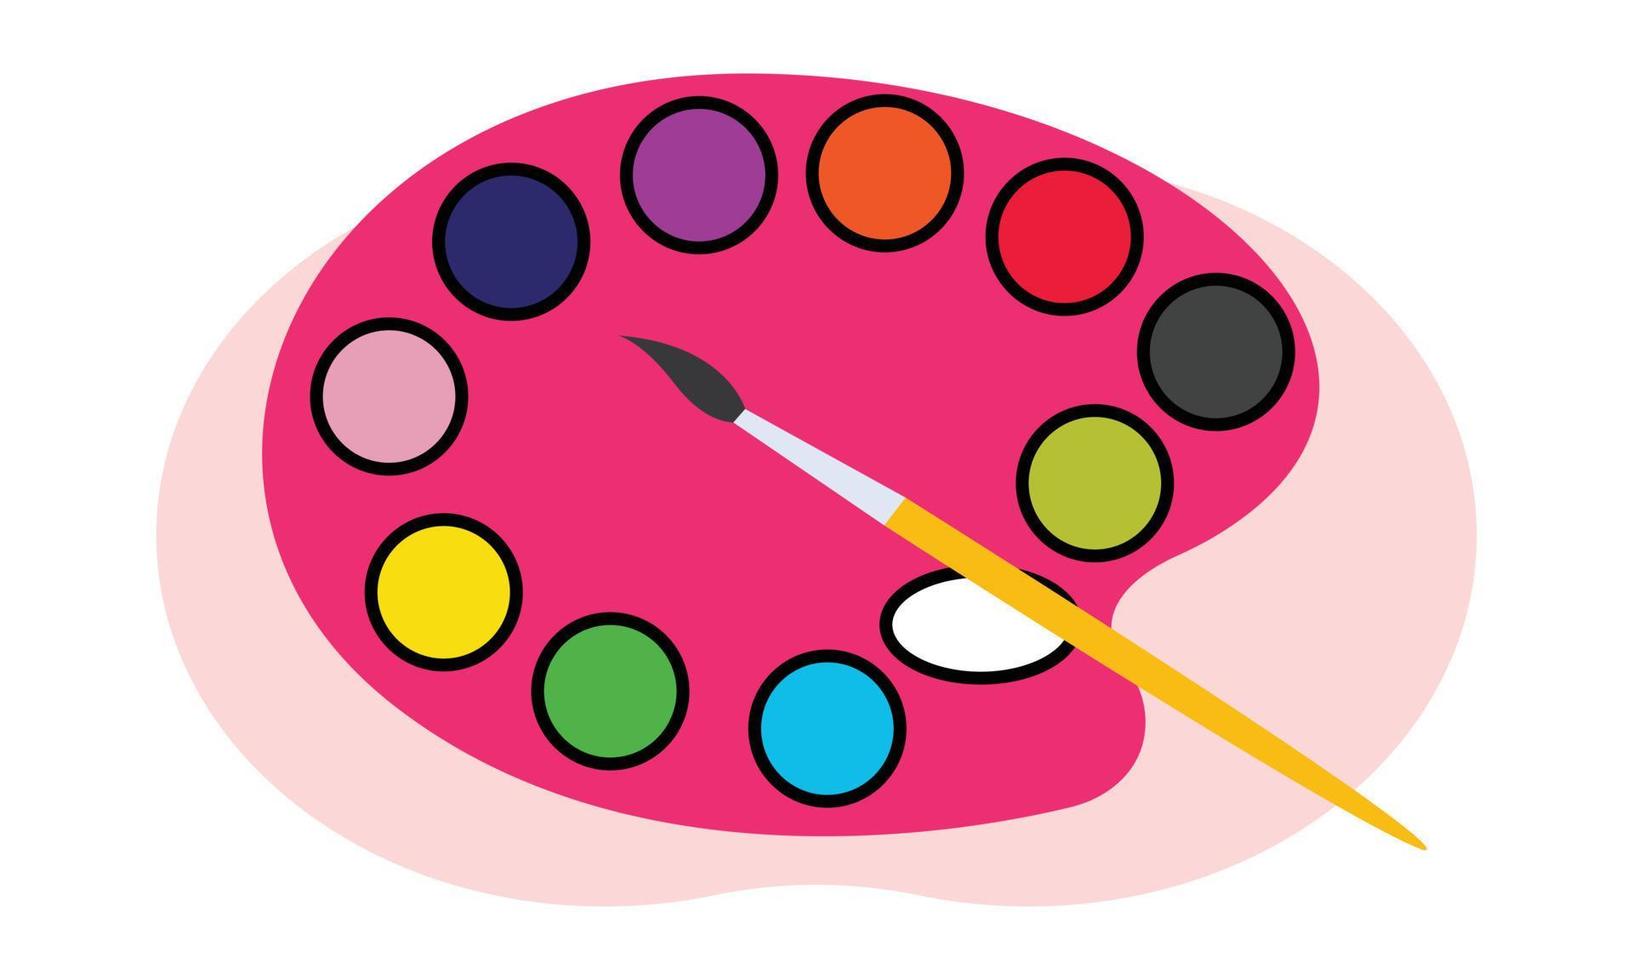 Farbpalettensymbol und Vektorgrafiken, Apple-Farbsymbol kreative Kinder und Farbpalettensymbolthema-Vektorillustration. vektor